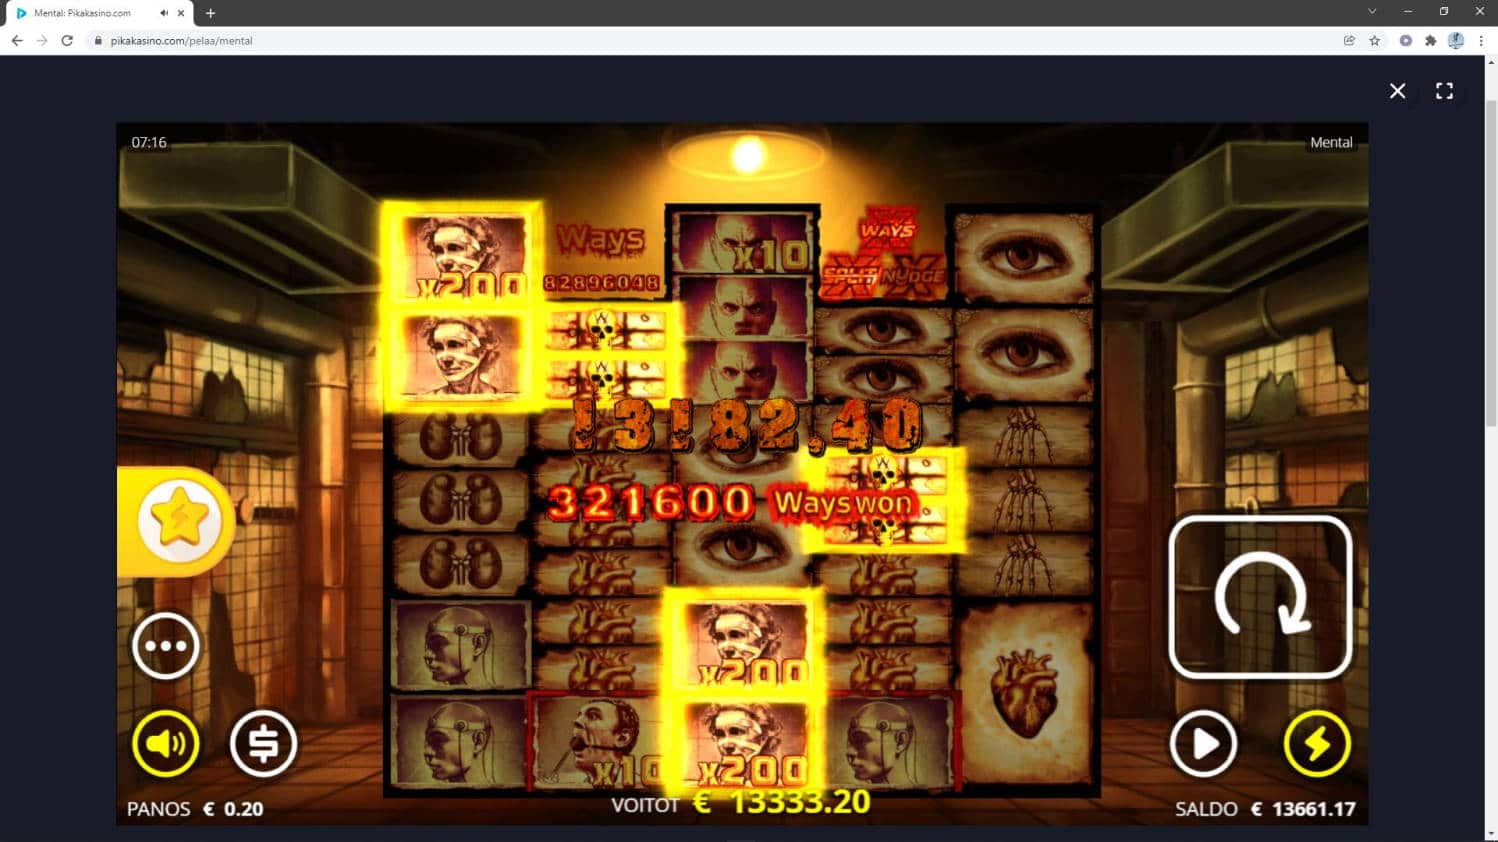 Mental Casino win picture by gazu 2.1.2022 13333.20e 66666X PikaKasino